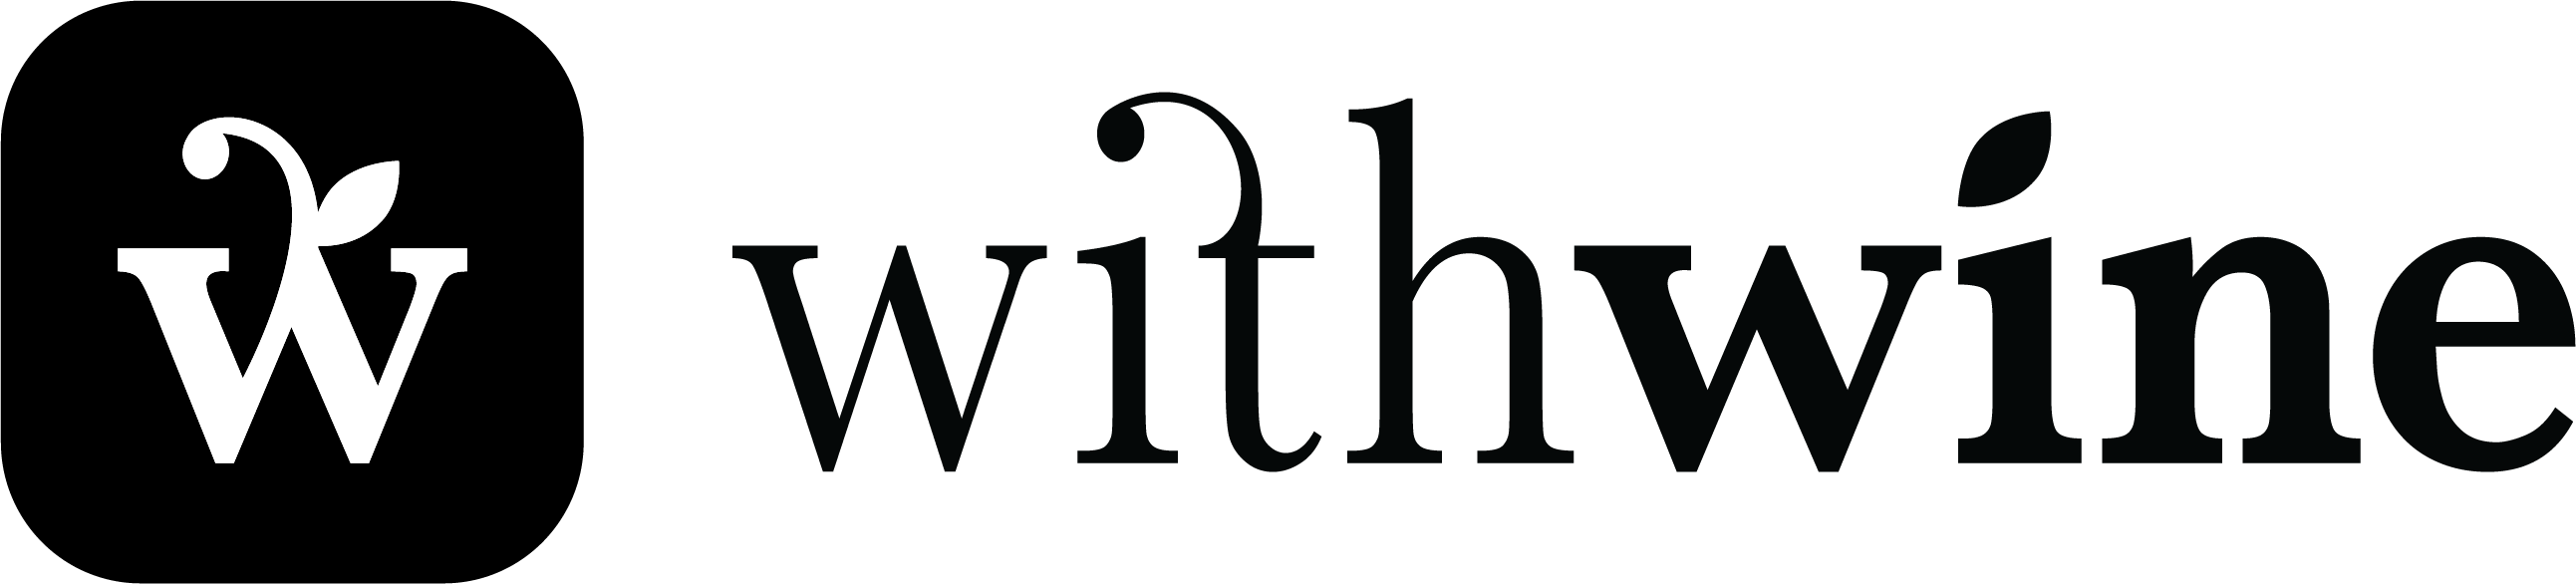 new black logo withwine